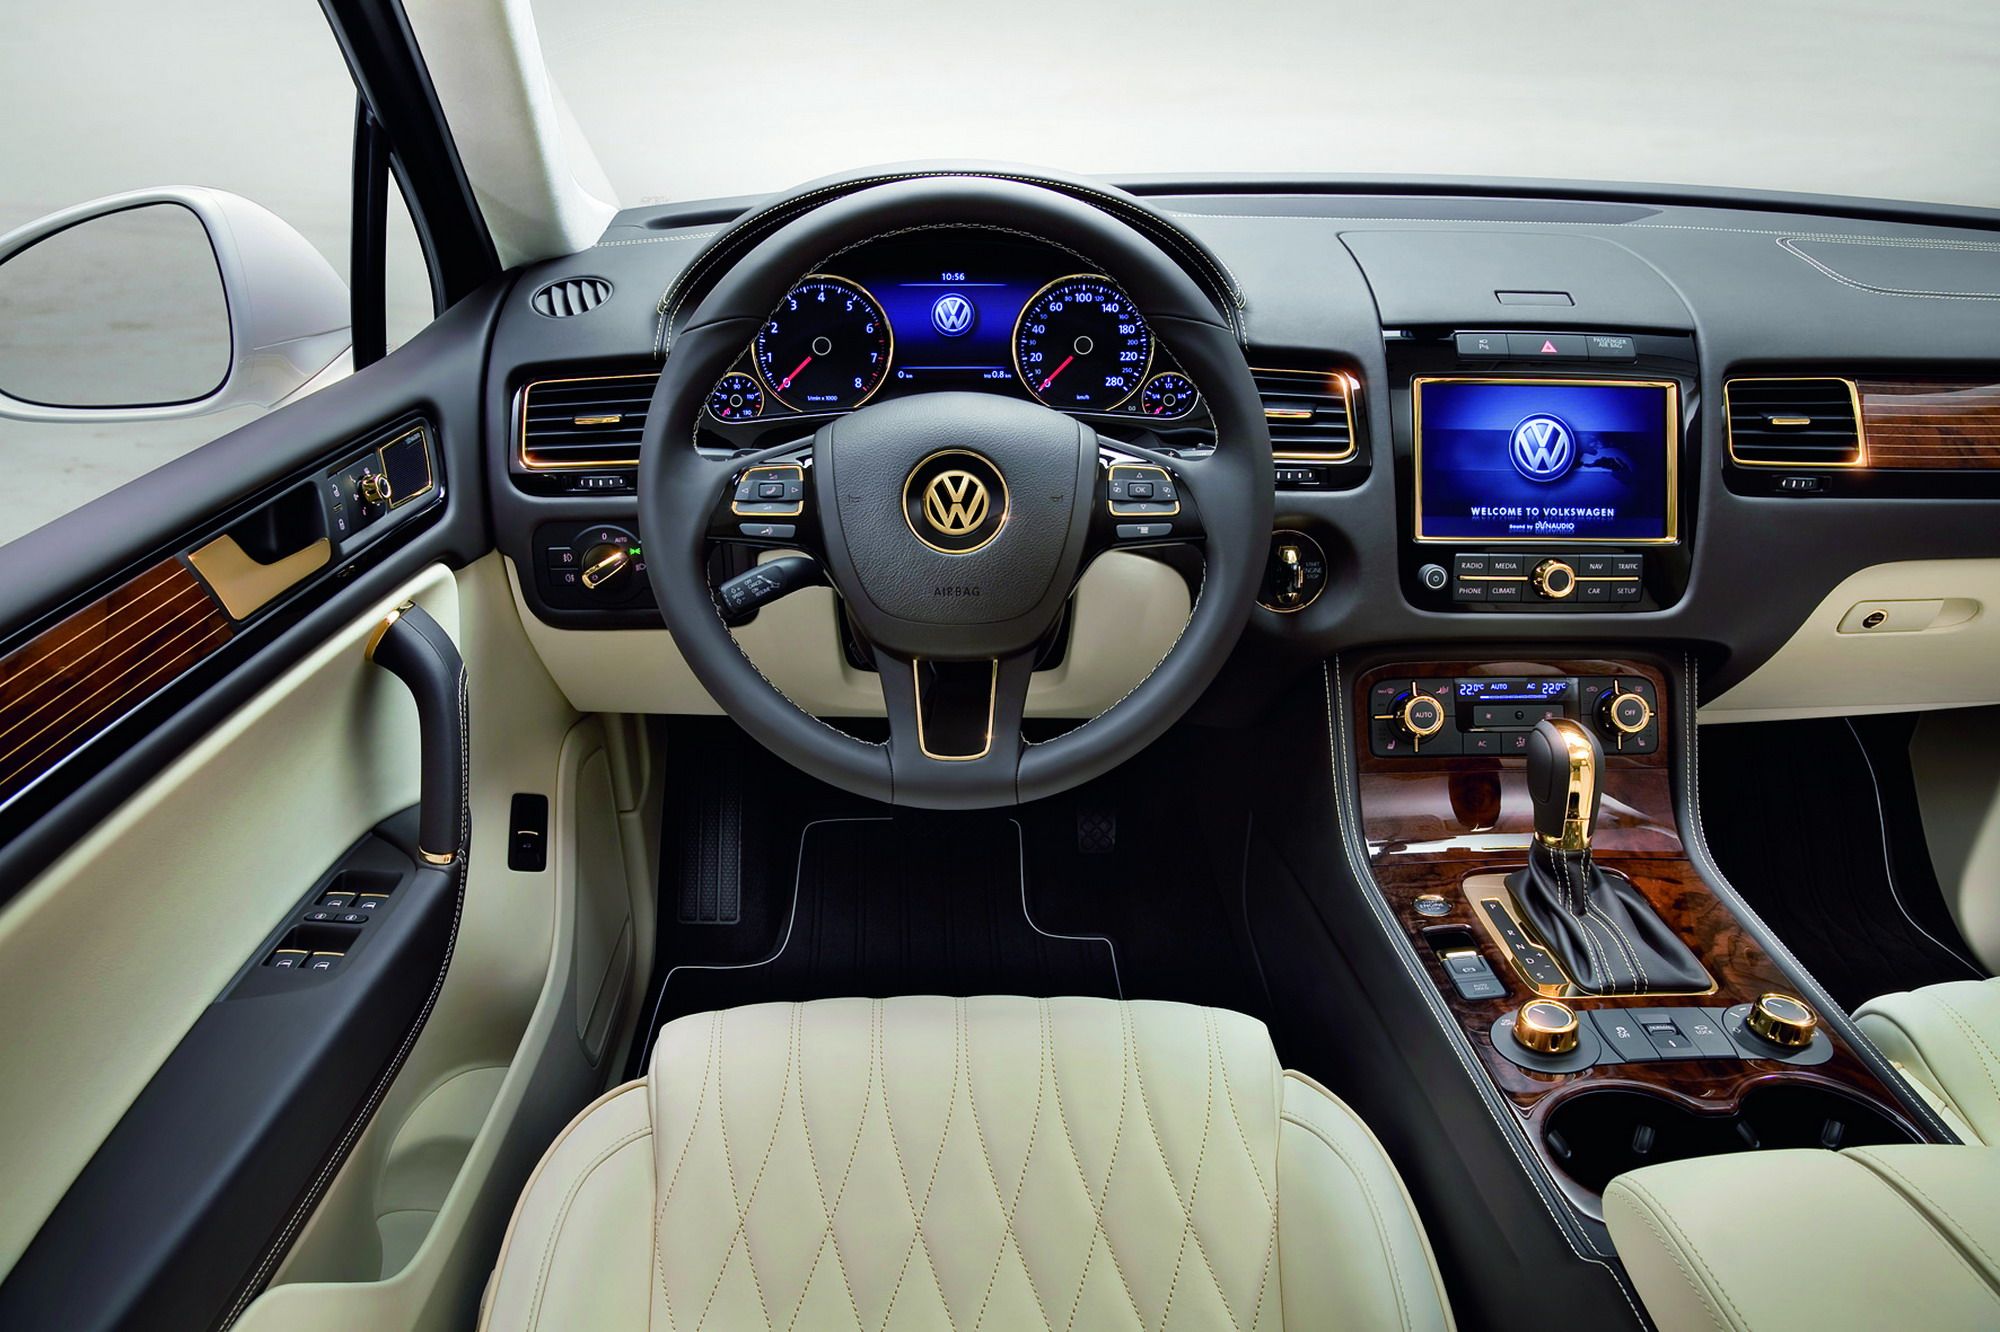 2011 Volkswagen Touareg Gold Edition Study